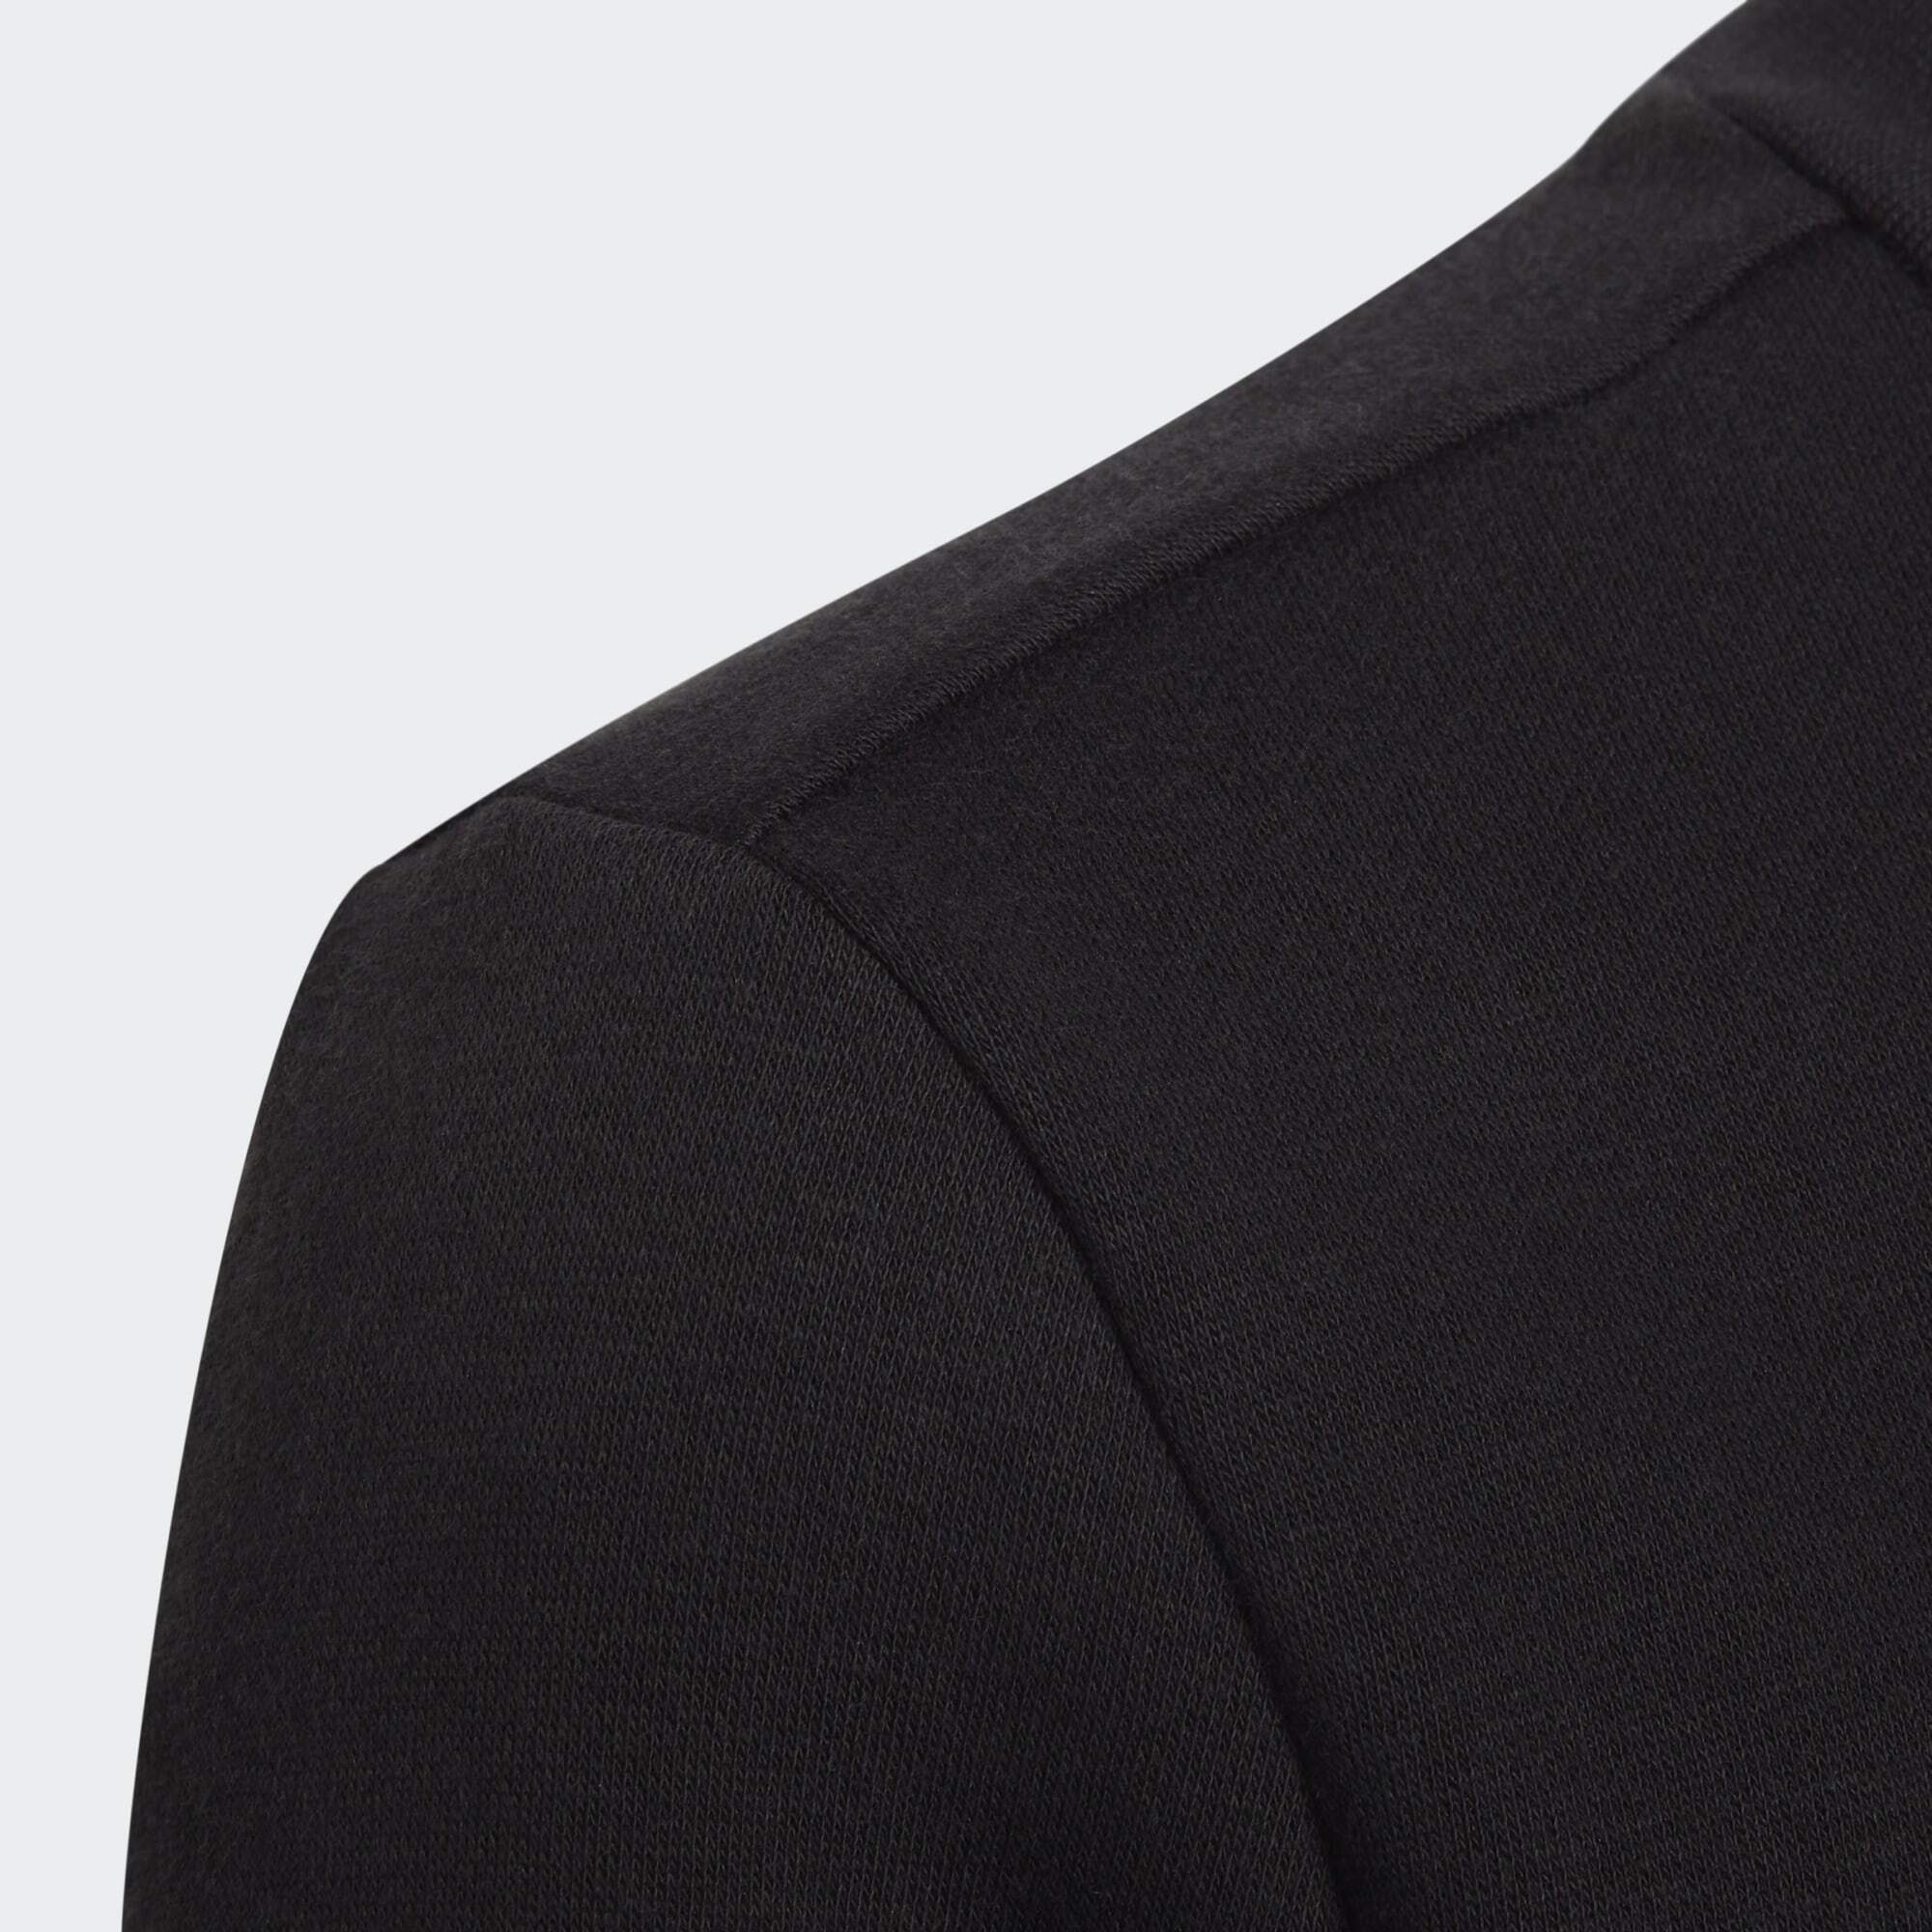 22 ENTRADA adidas Black Performance SWEATSHIRT Sweater